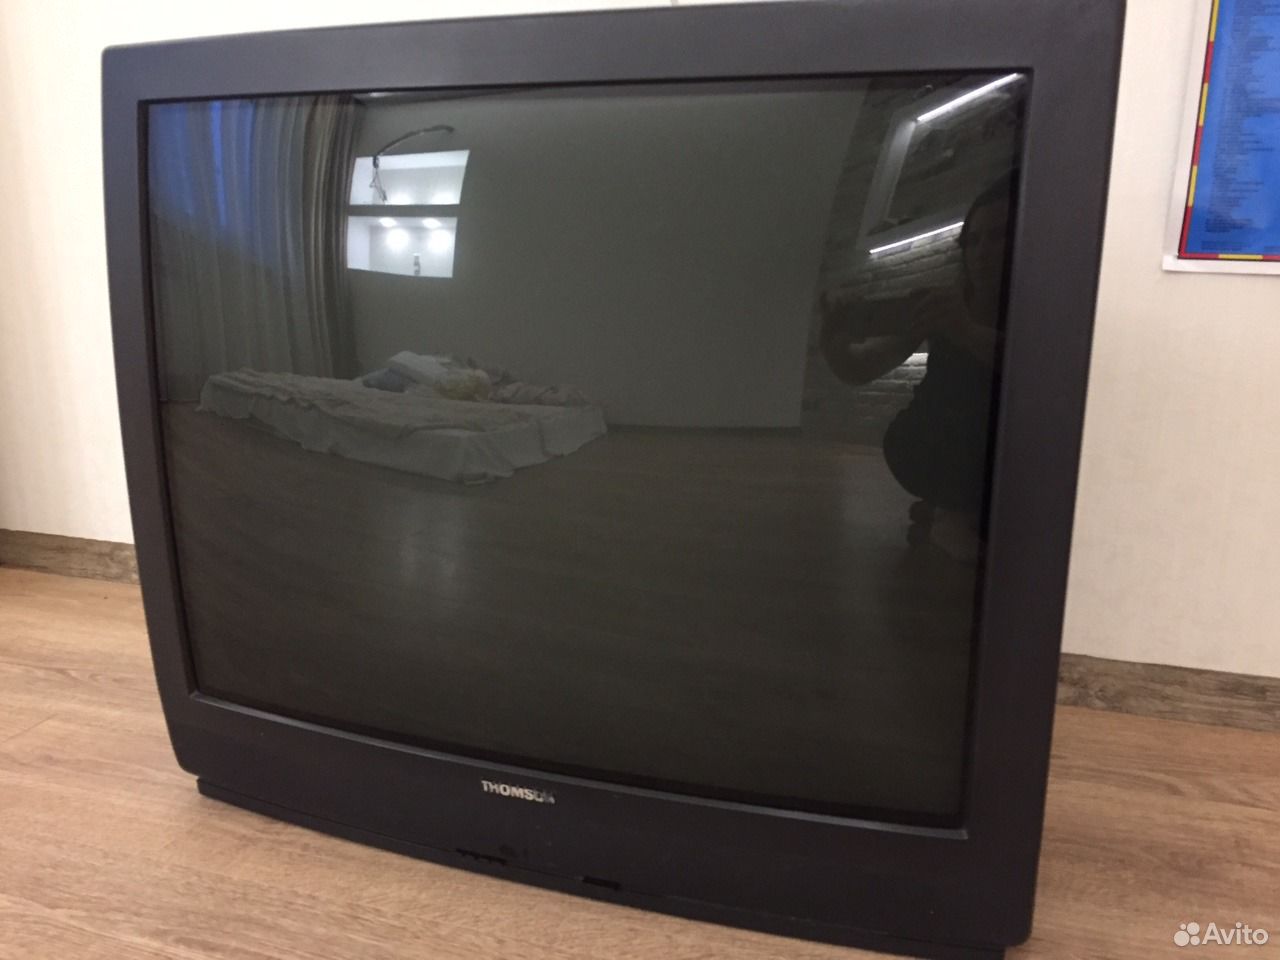 Телевизор бу. Авито телевизор б у плоский. Продам телевизор бу. Фото телевизора авито.